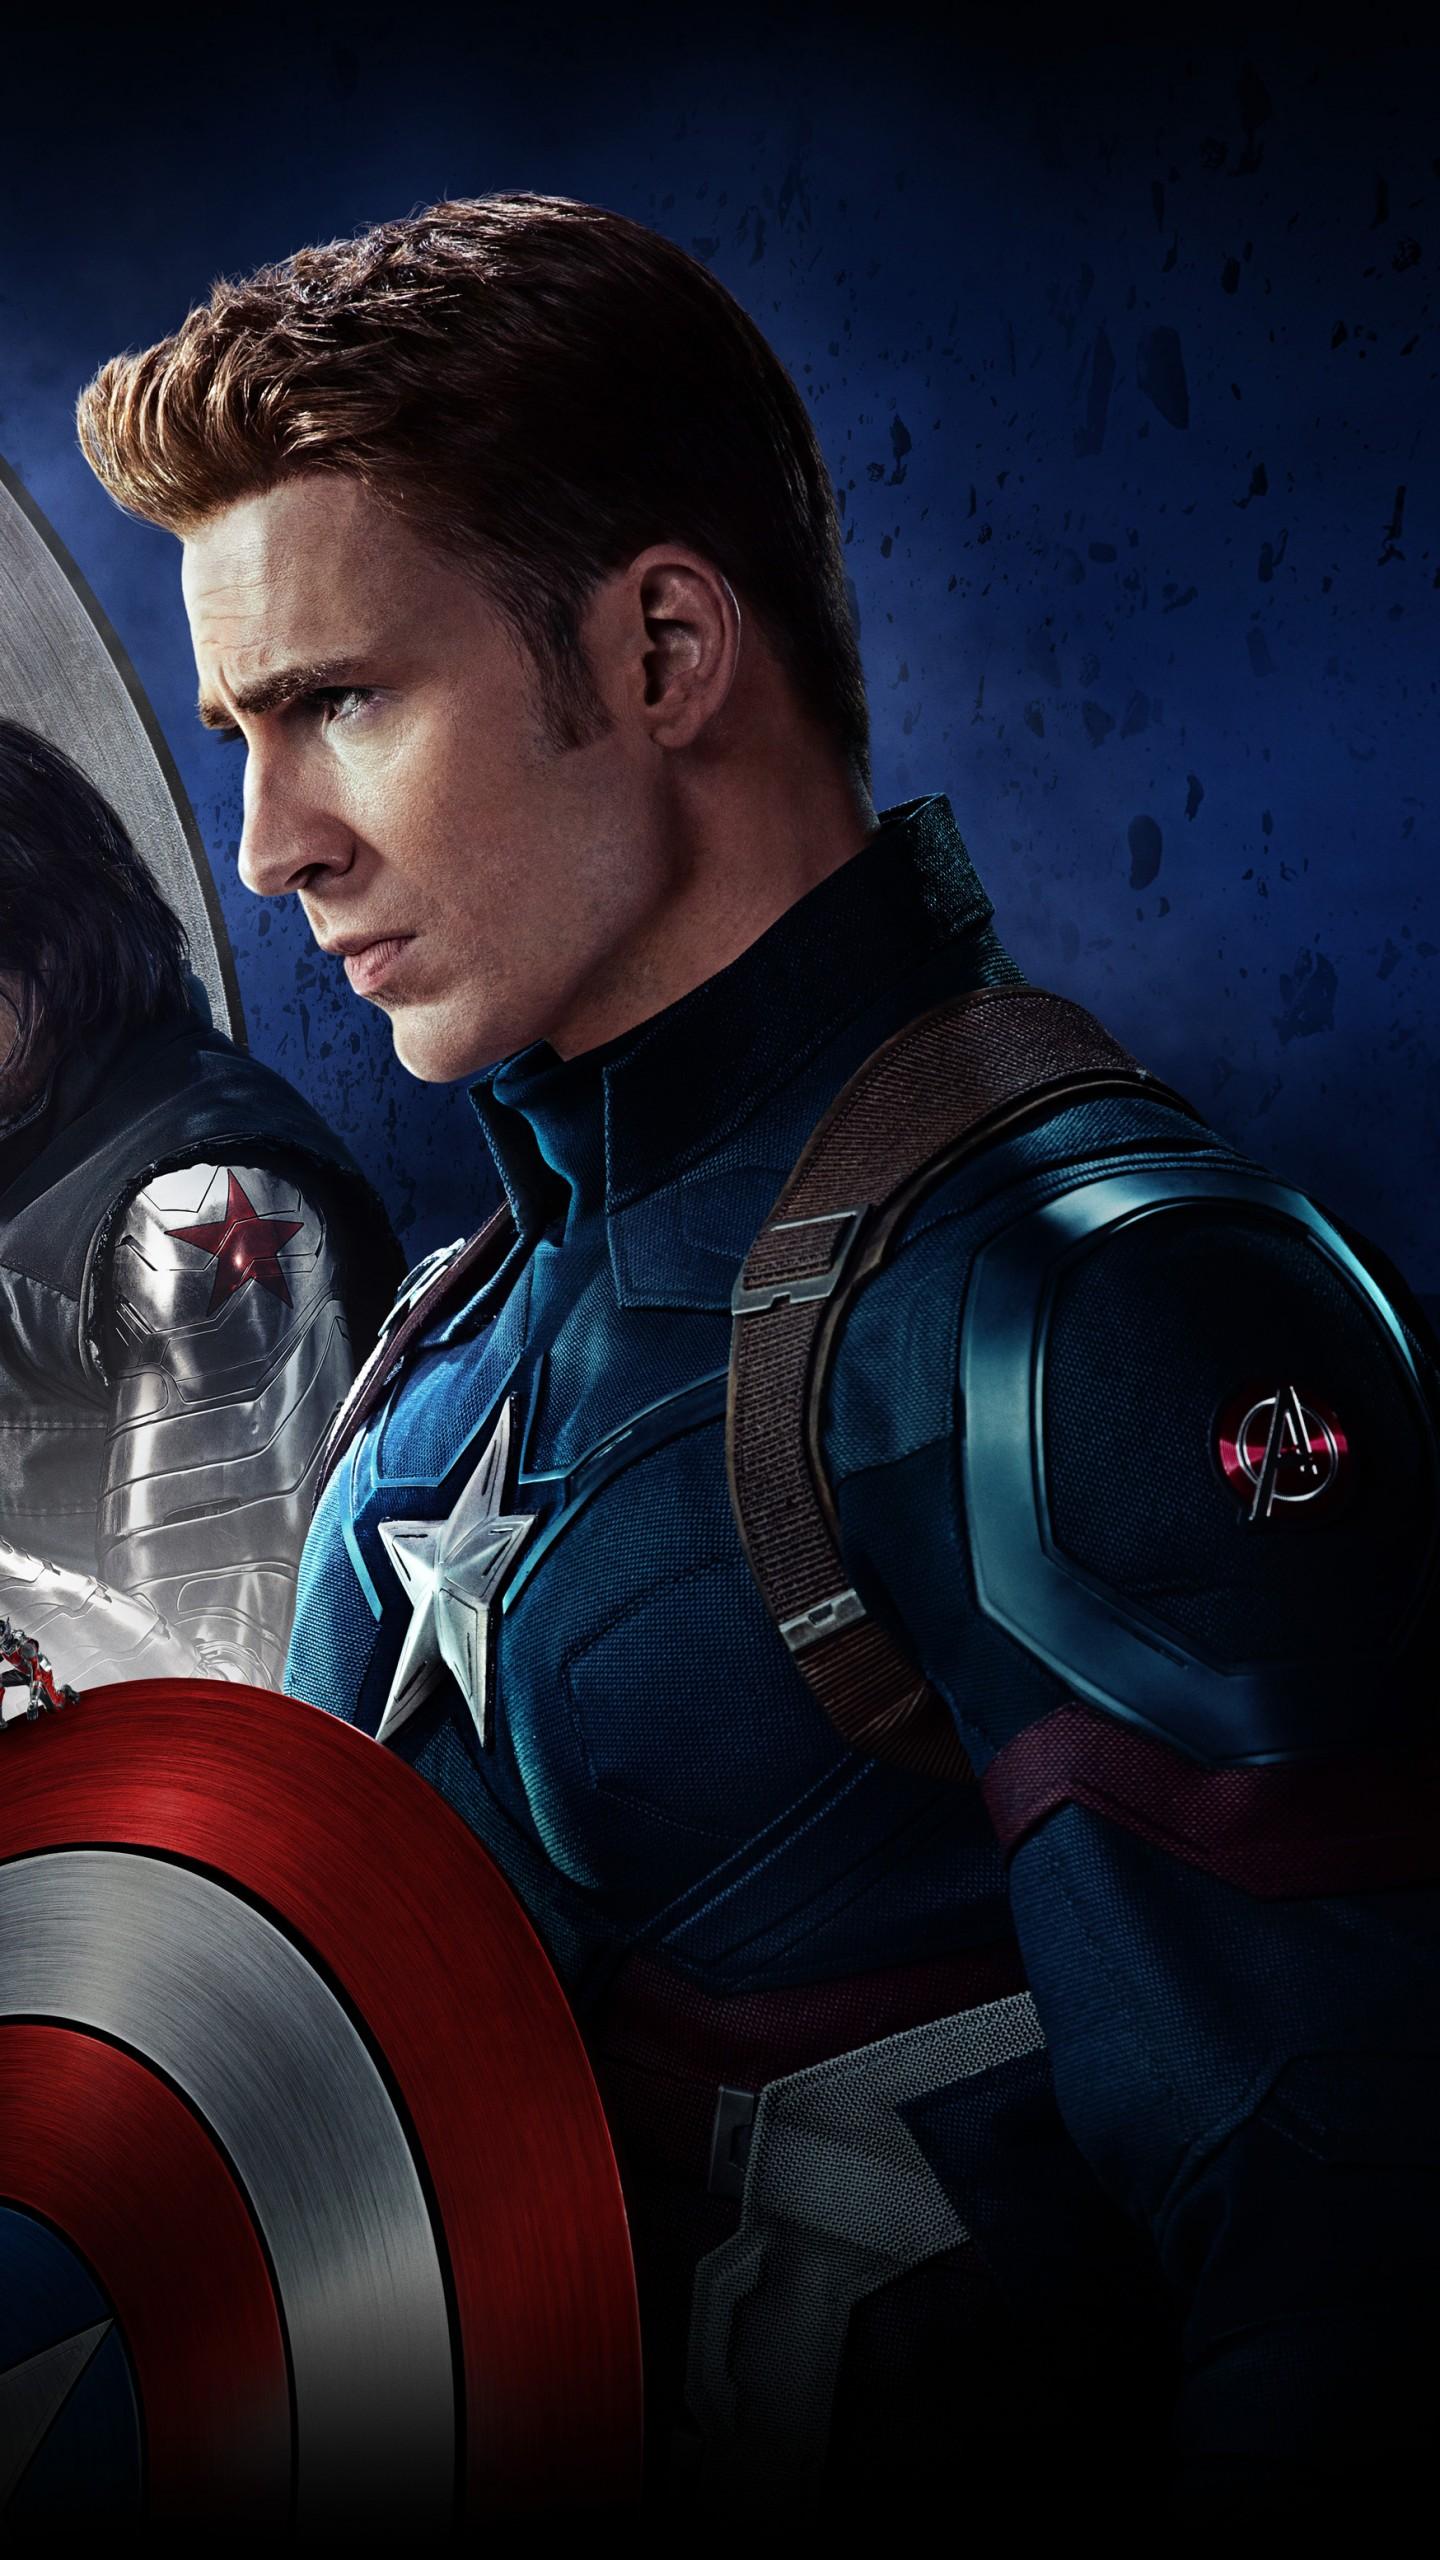 Wallpaper Captain America, Civil War, 2016 Movies, 4K, 5K, Movies